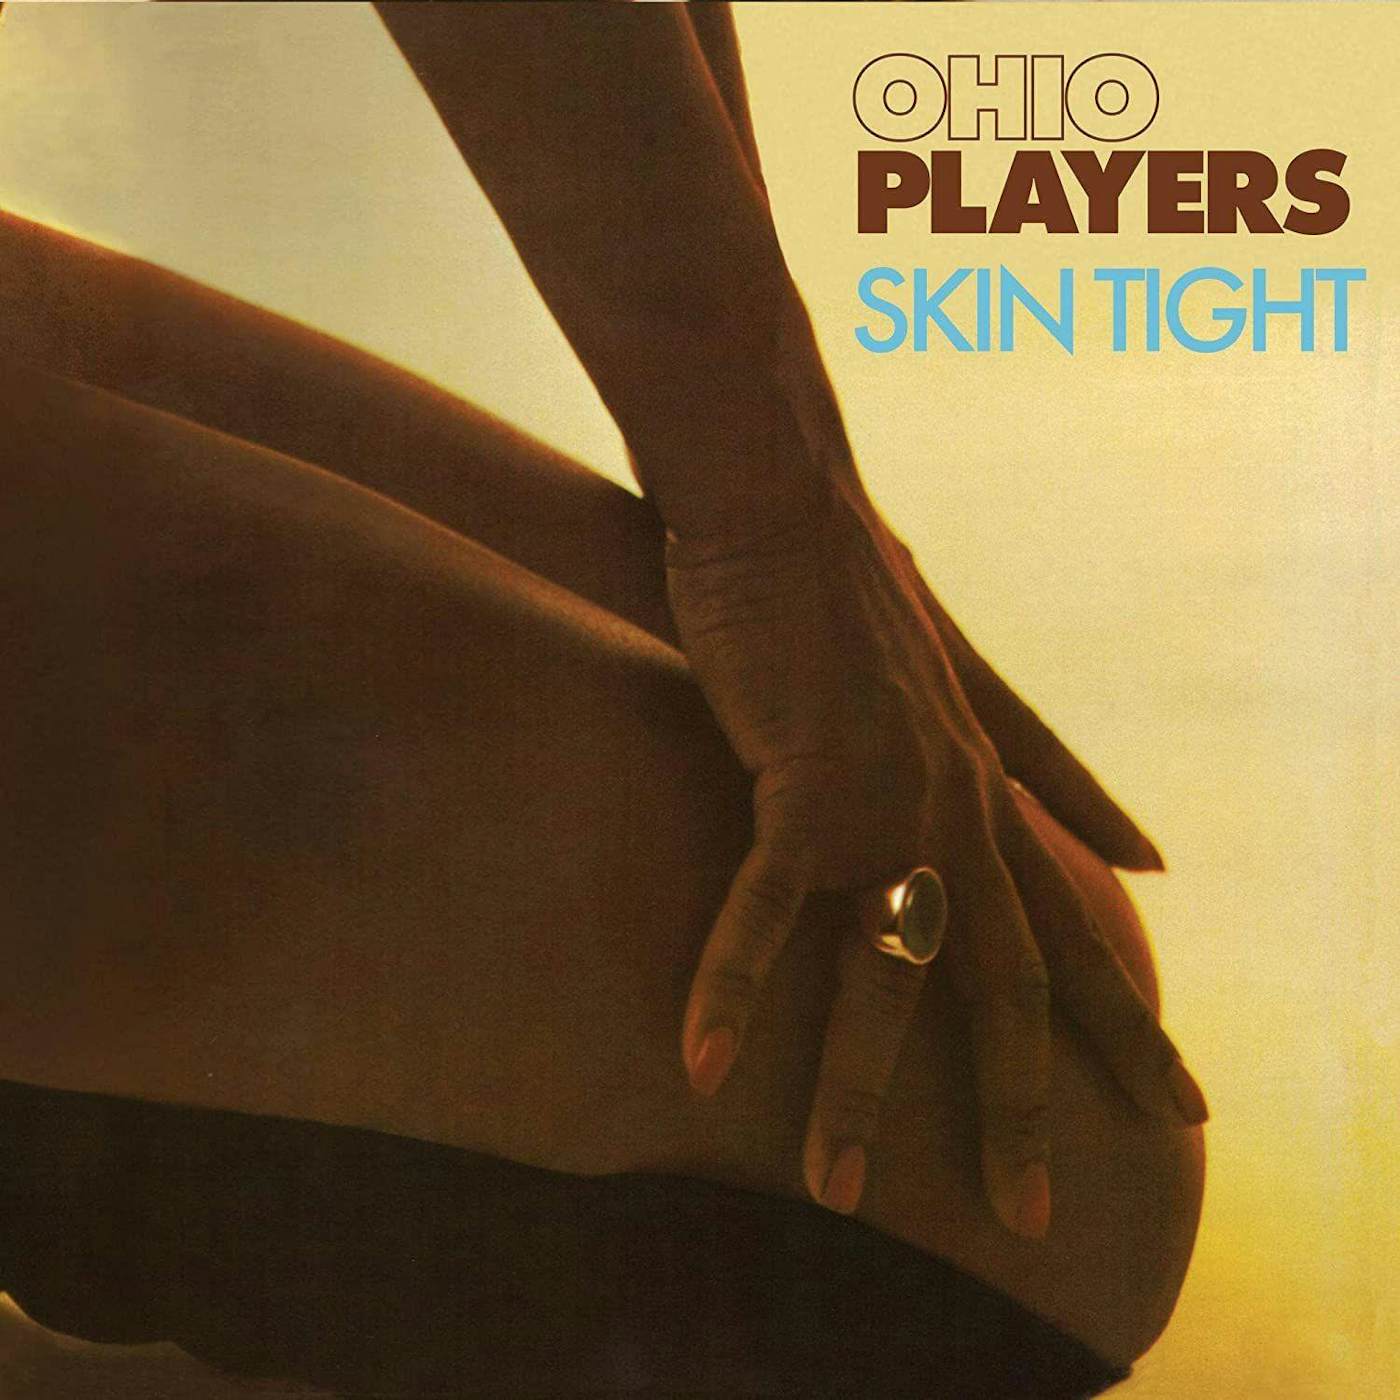 Ohio Players Skin Tight (Limited/Gold Vinyl/180g) Vinyl Record